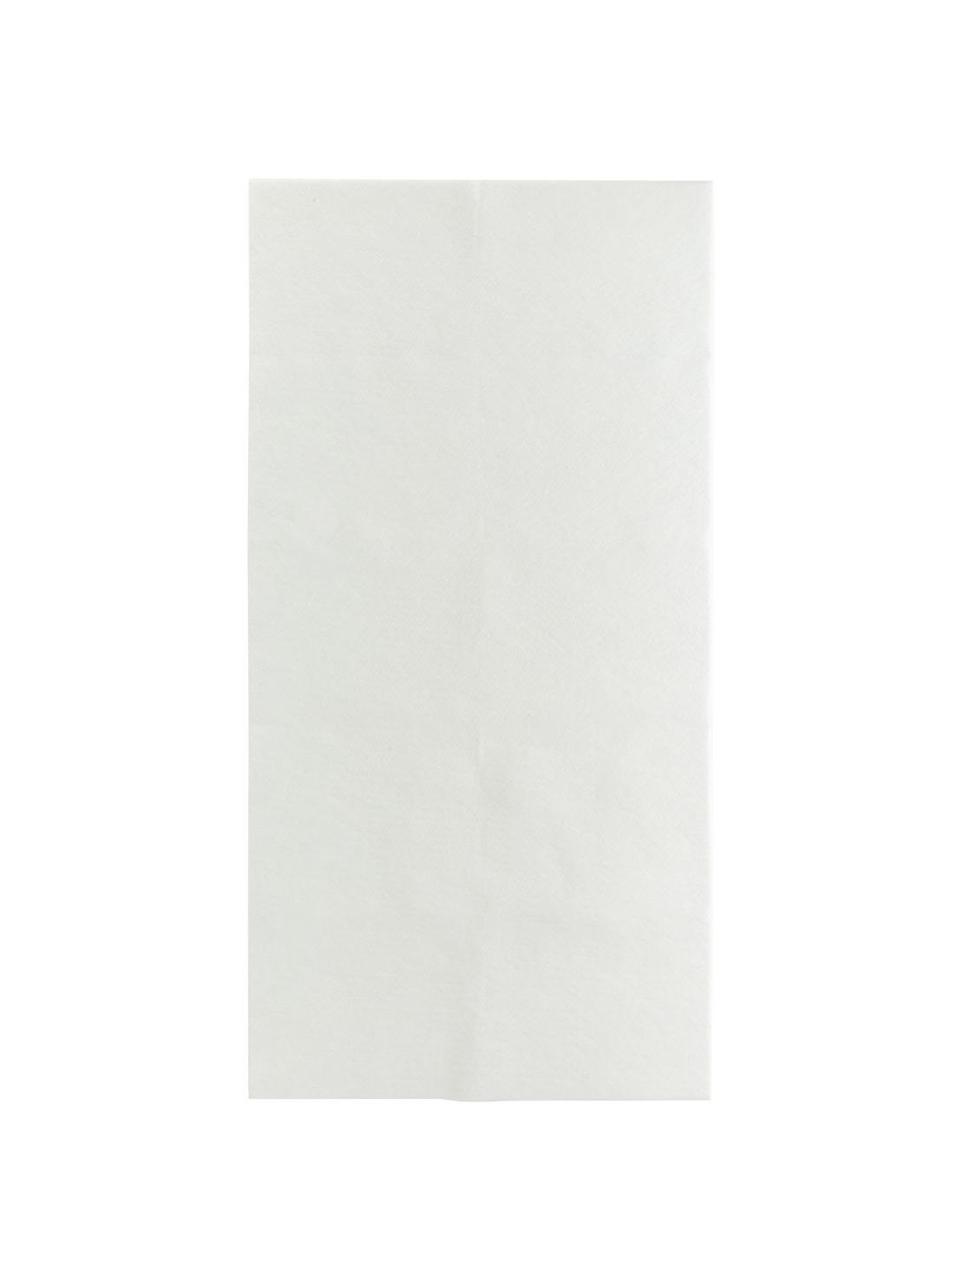 Base de alfombra My Slip Stop, Vellón de poliéster con revestimiento antideslizante, Blanco crema, An 180 x L 270 cm